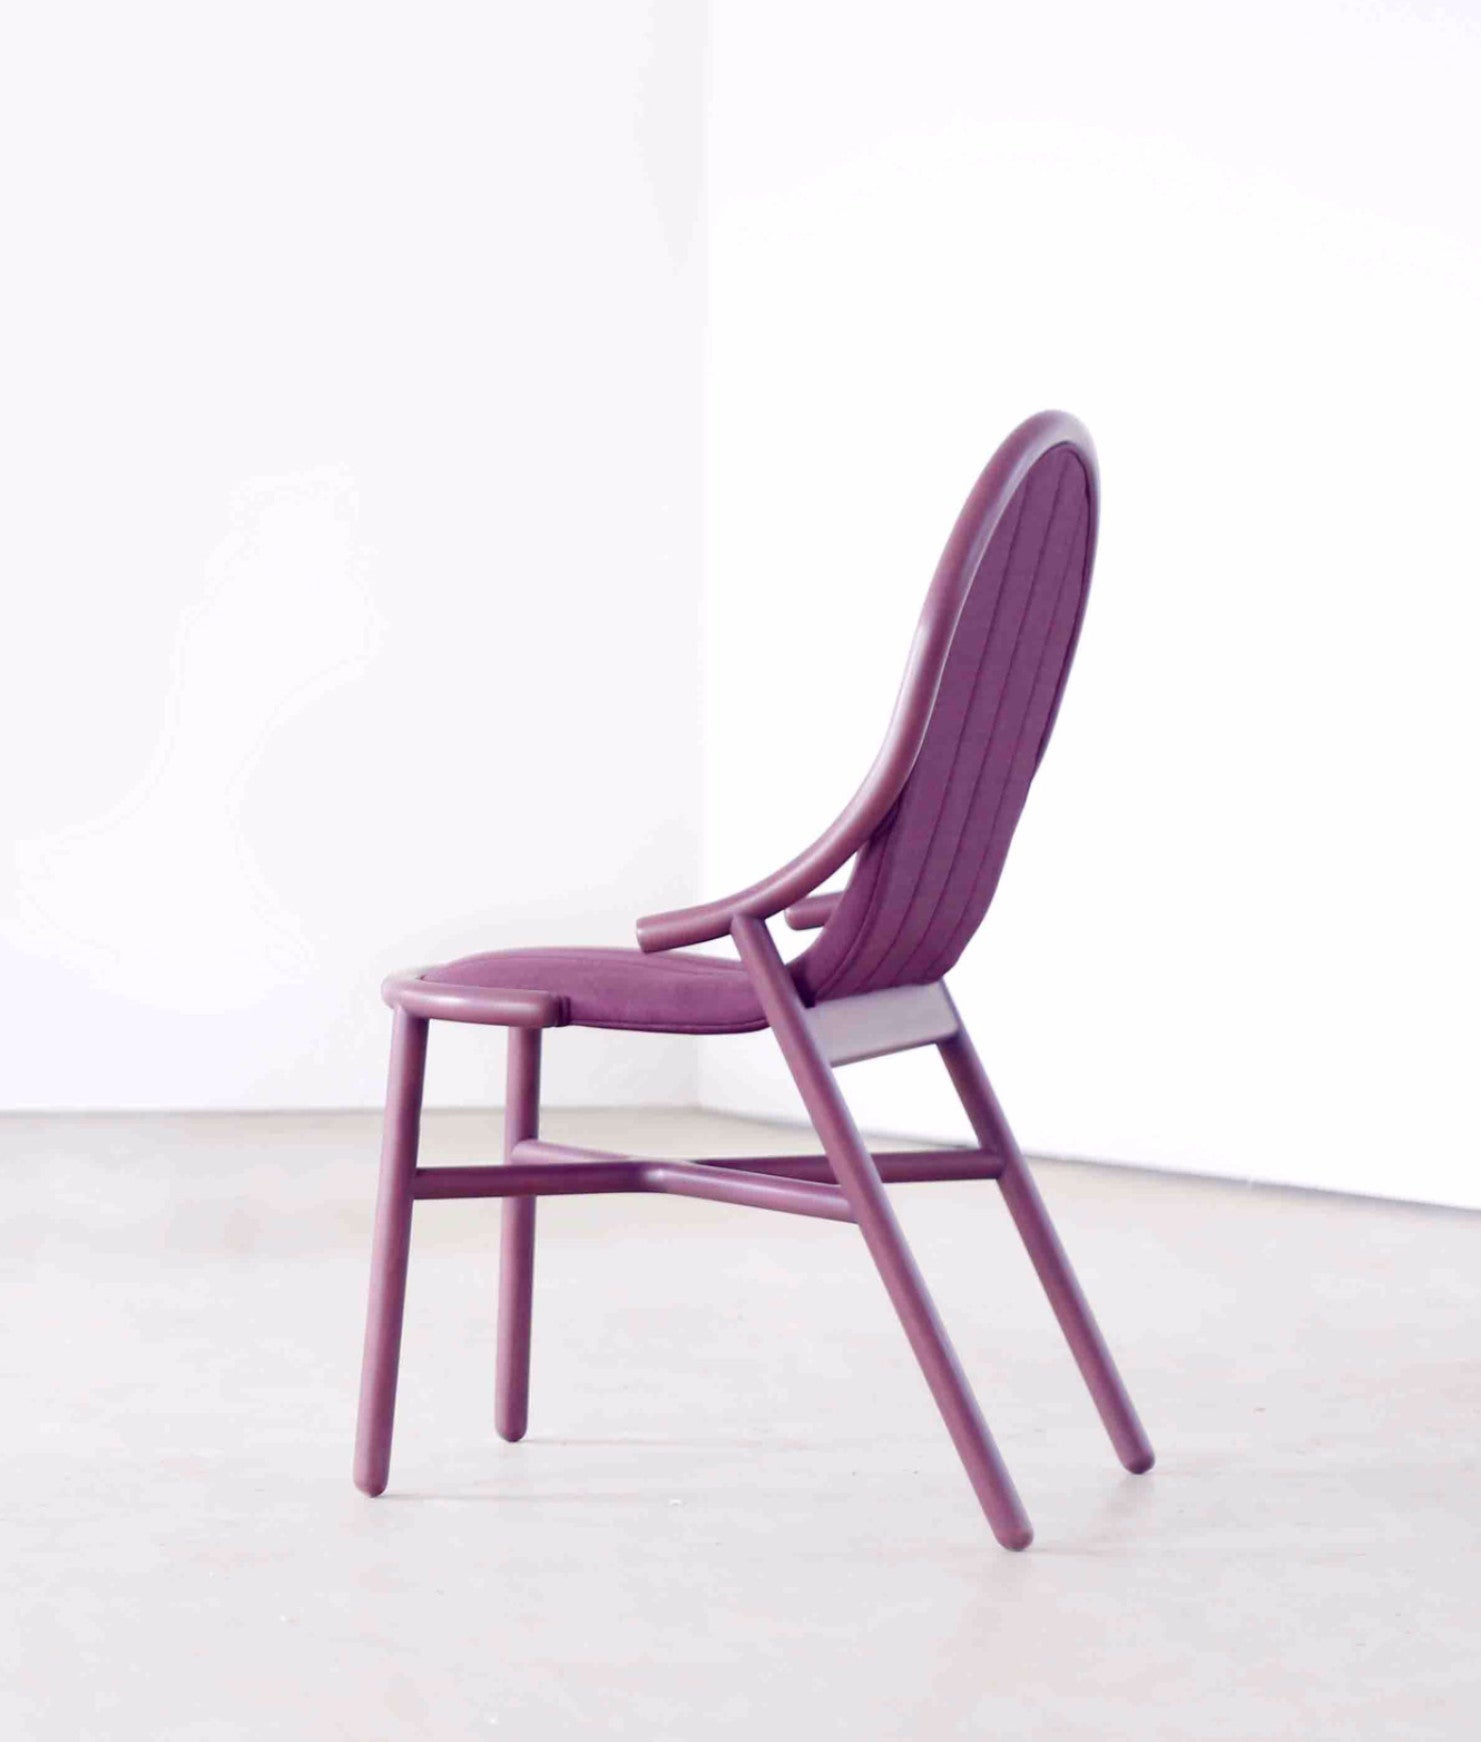 STARTUP CHAIR Chair ziinlife Purple